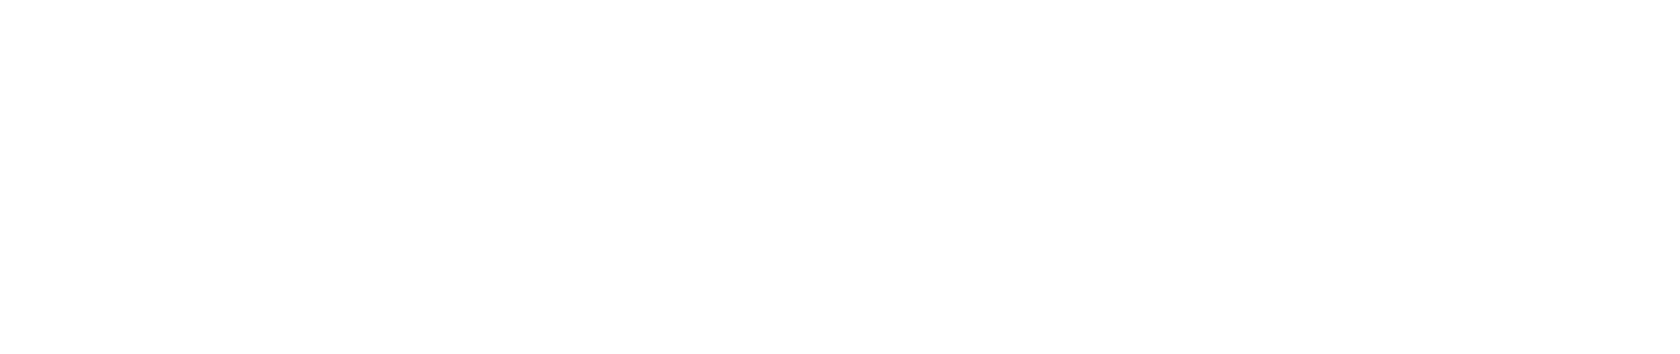 Prudential Financial Logo groß für dunkle Hintergründe (transparentes PNG)